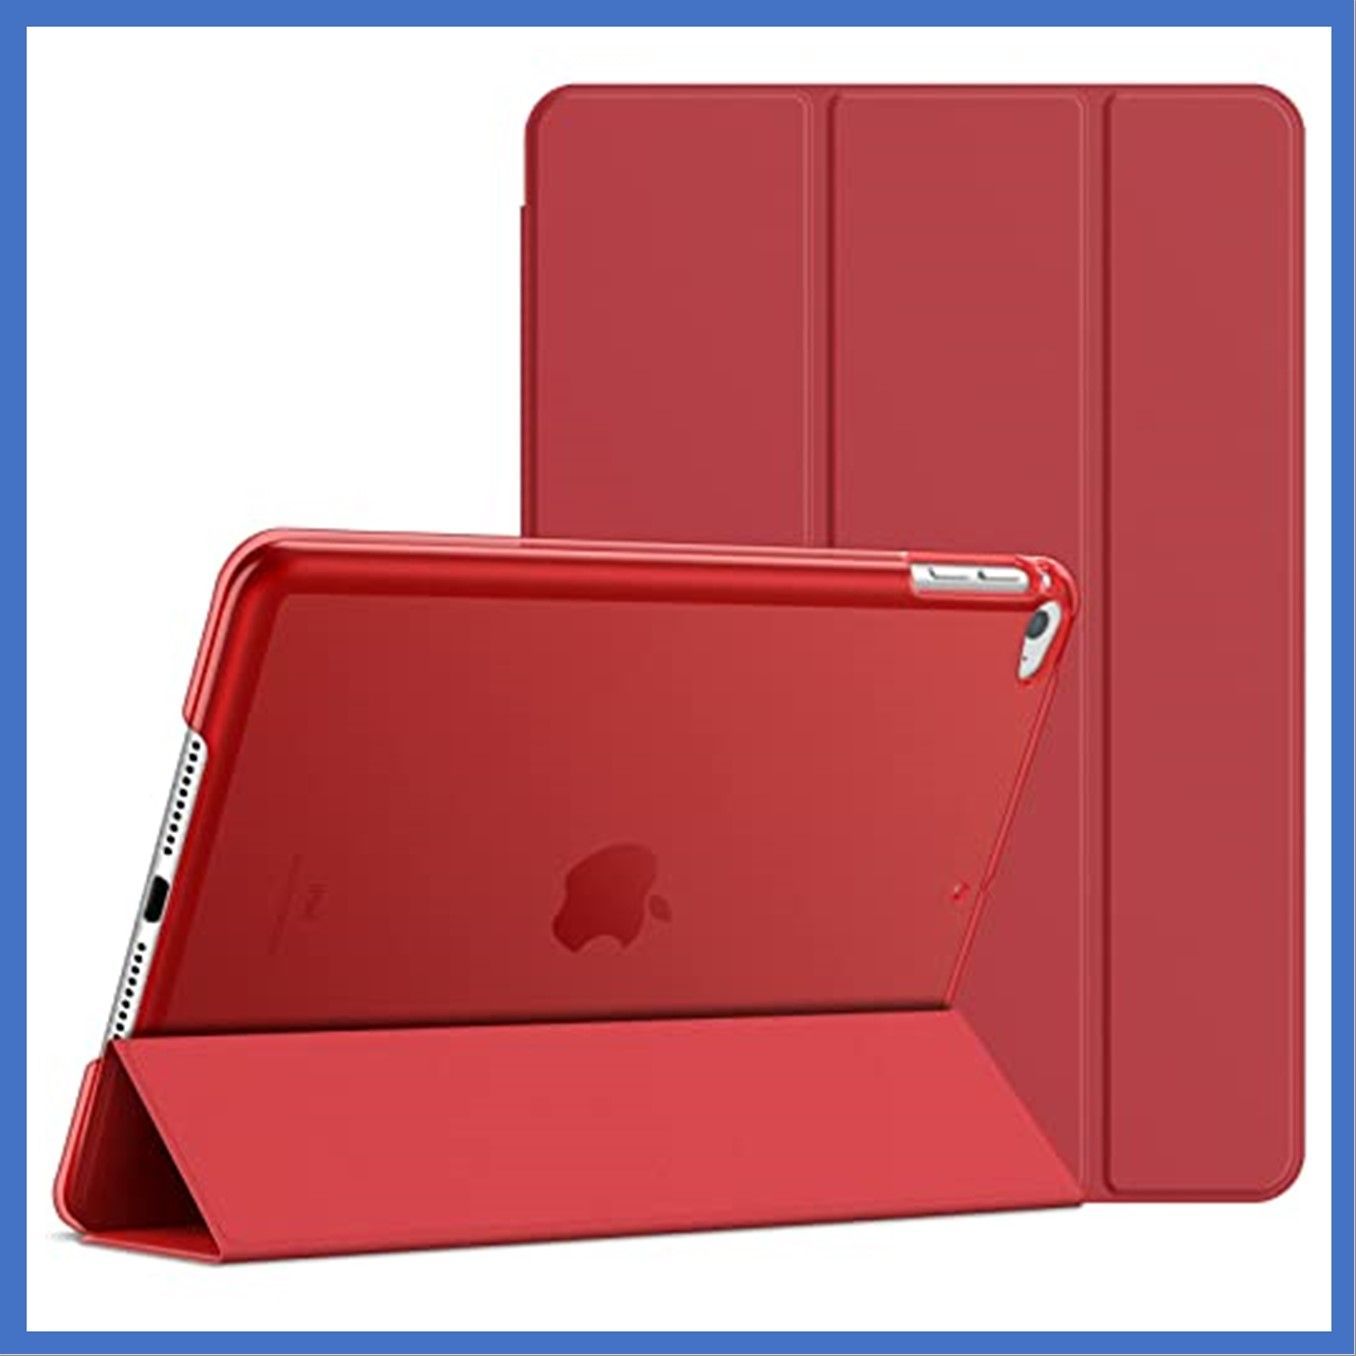 SALE／76%OFF】 JEDirect iPad mini 三つ折スタンド ケース ブラック